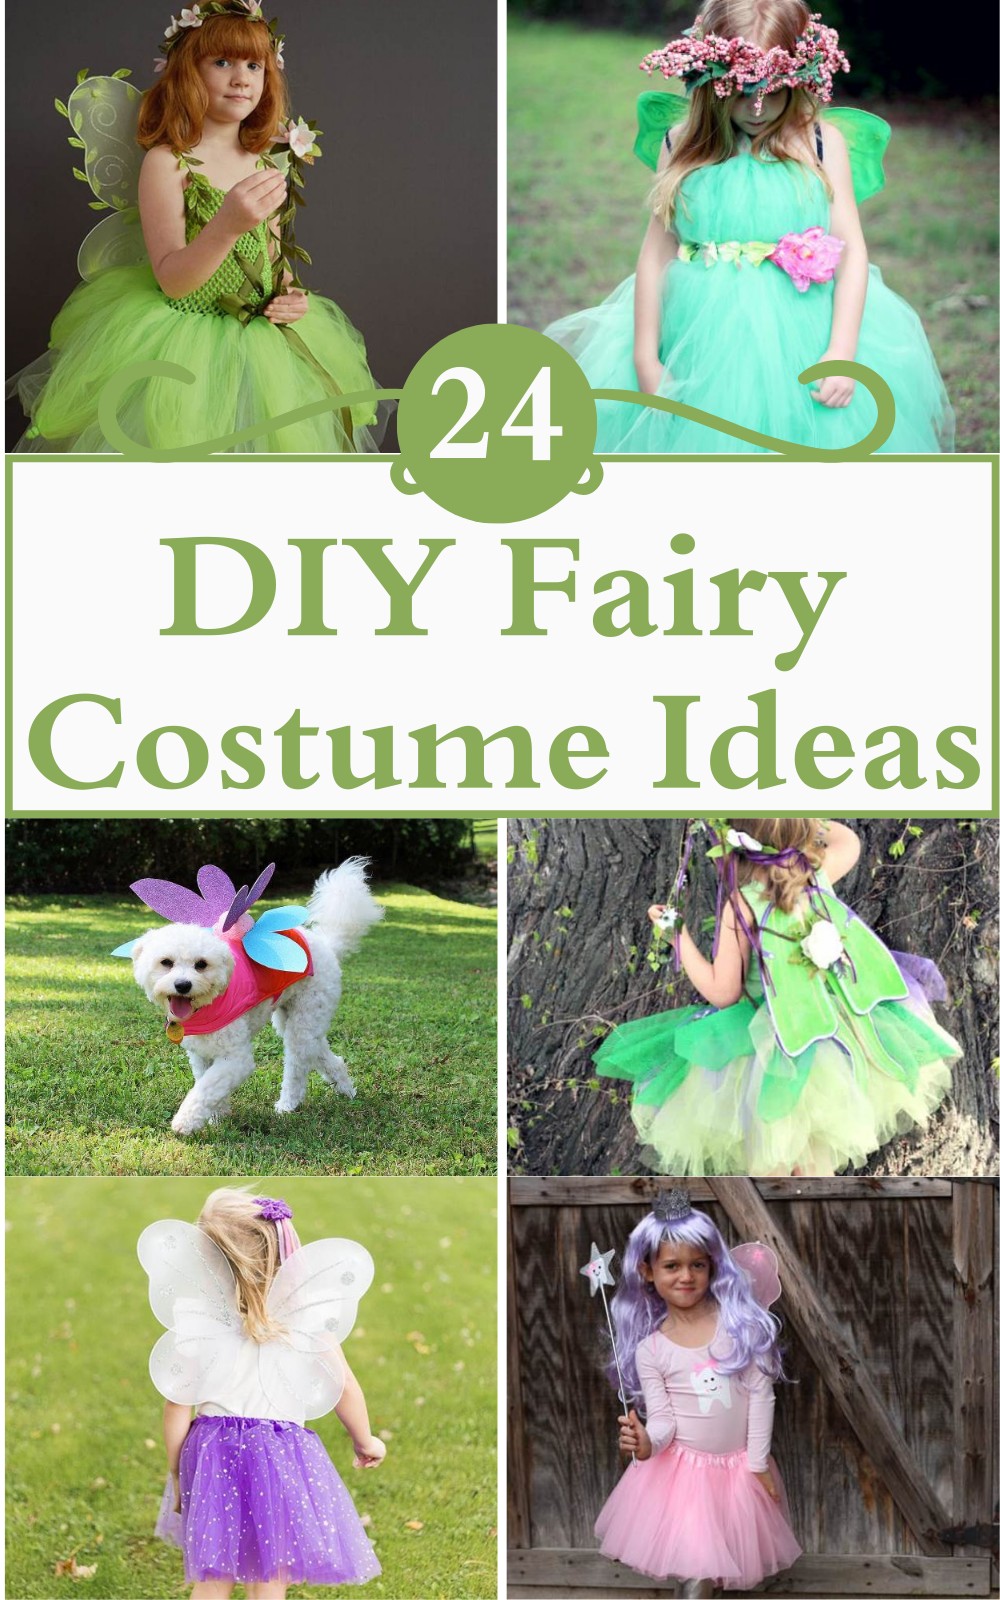 24 DIY Fairy Costume Ideas